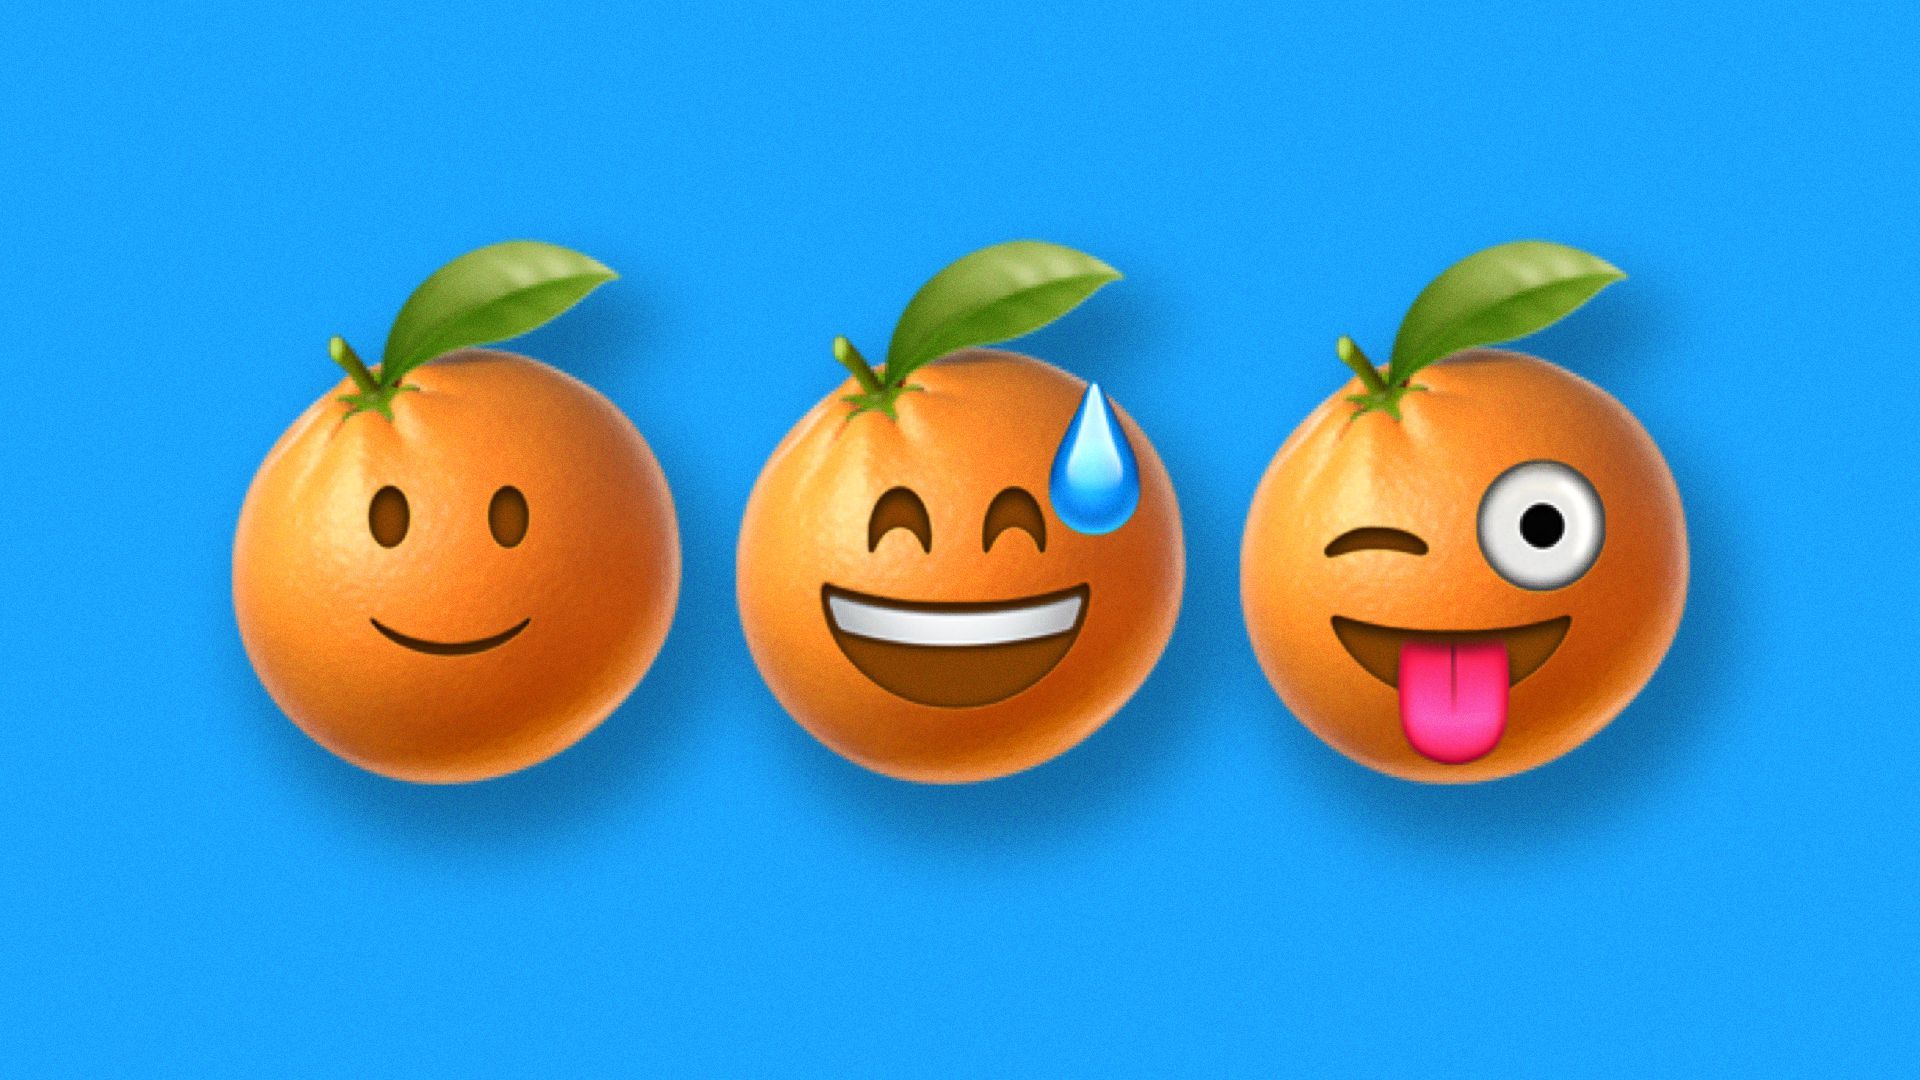 Illustration of three different smiling emojis imposed on the orange emoji.